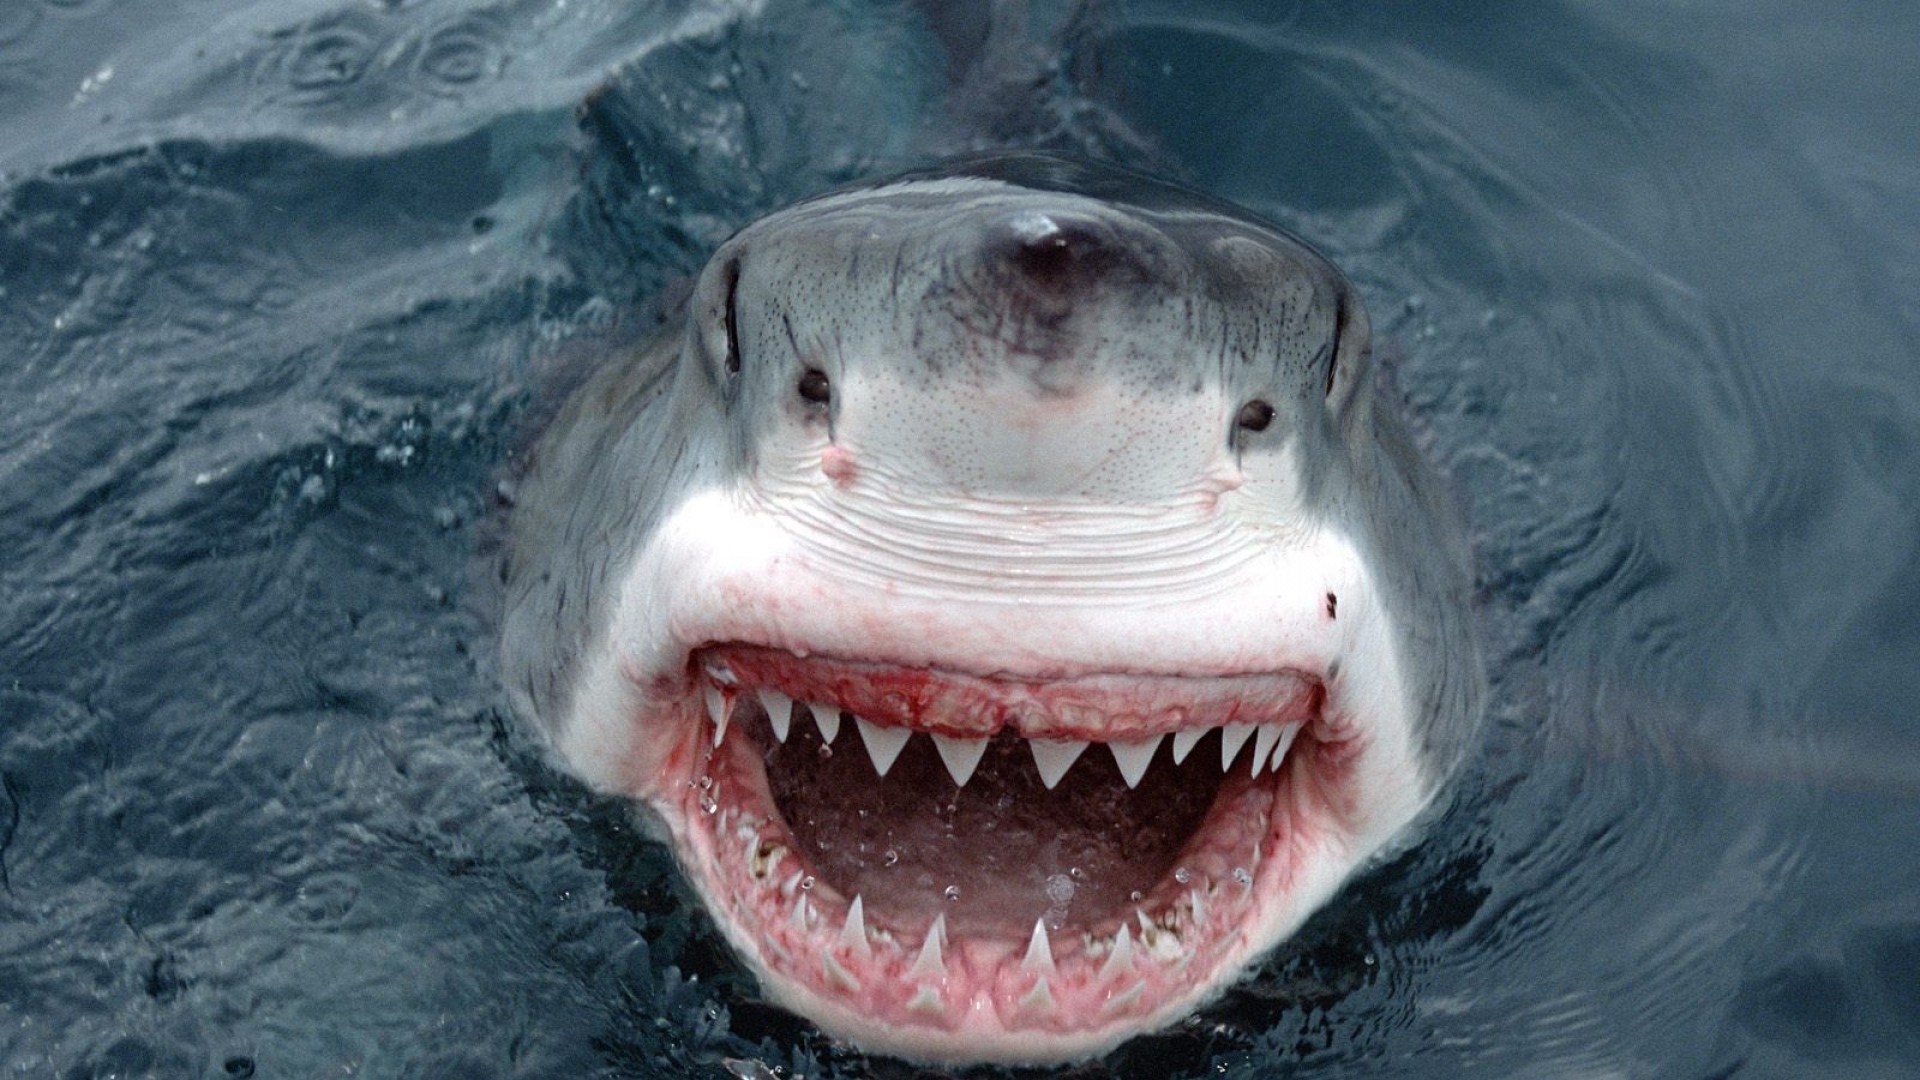  Human Teeth Are As Strong As the Teeth of a Shark